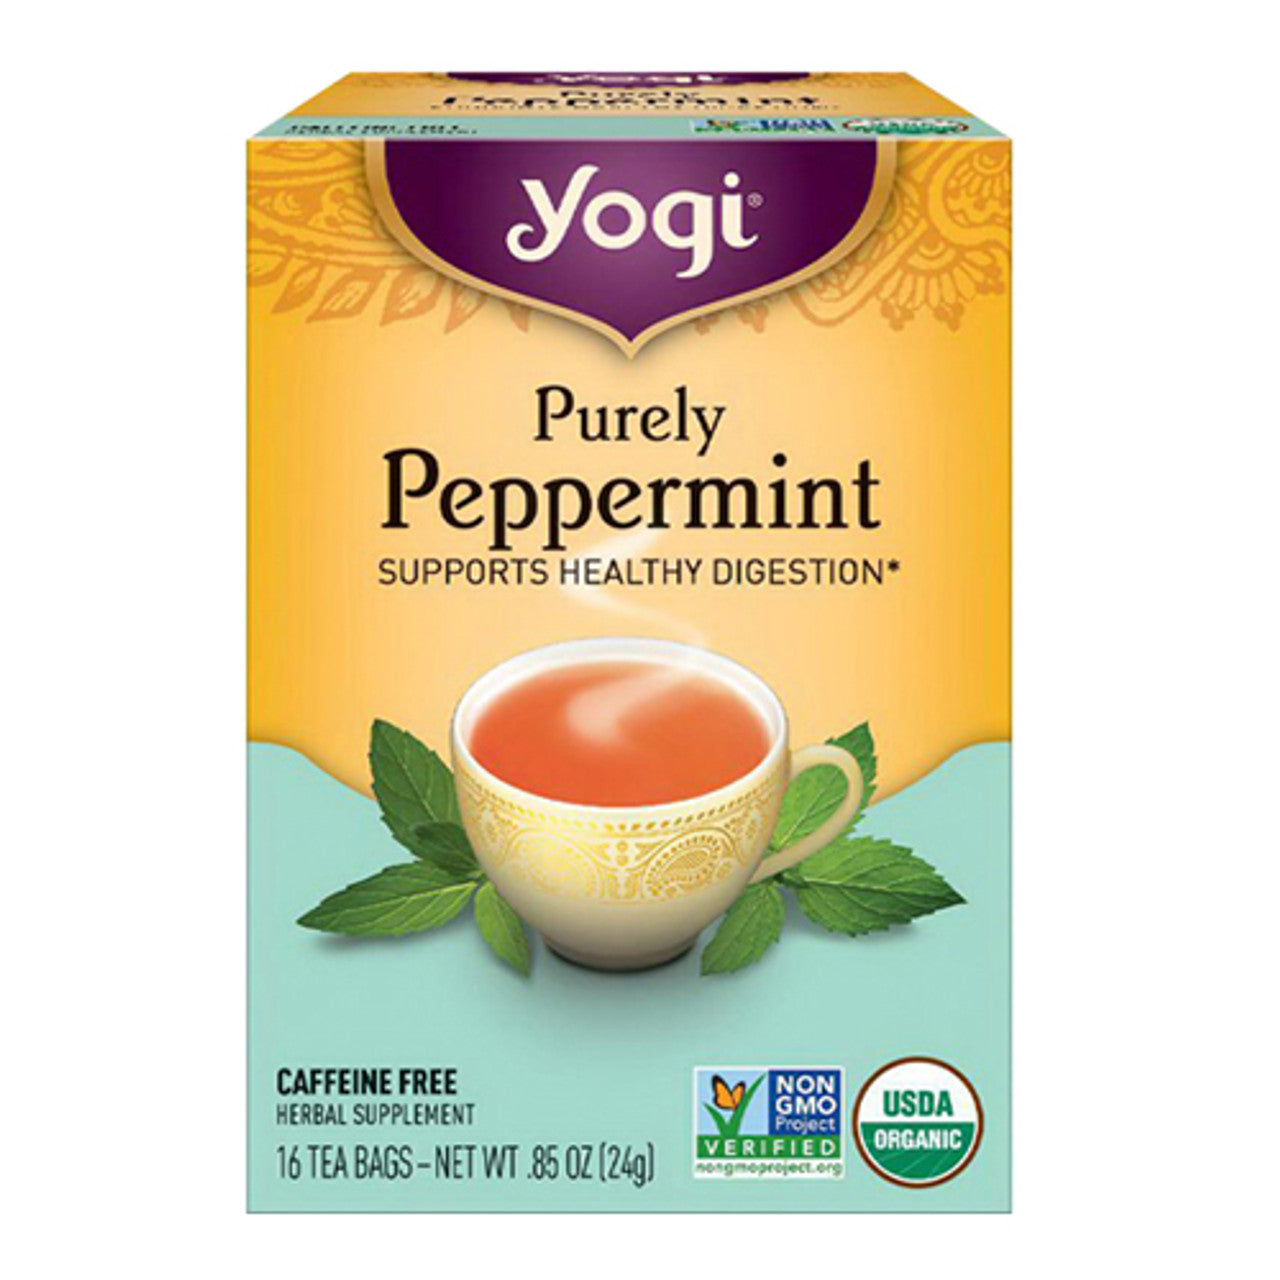 Yogi Purely Peppermint 16 bags